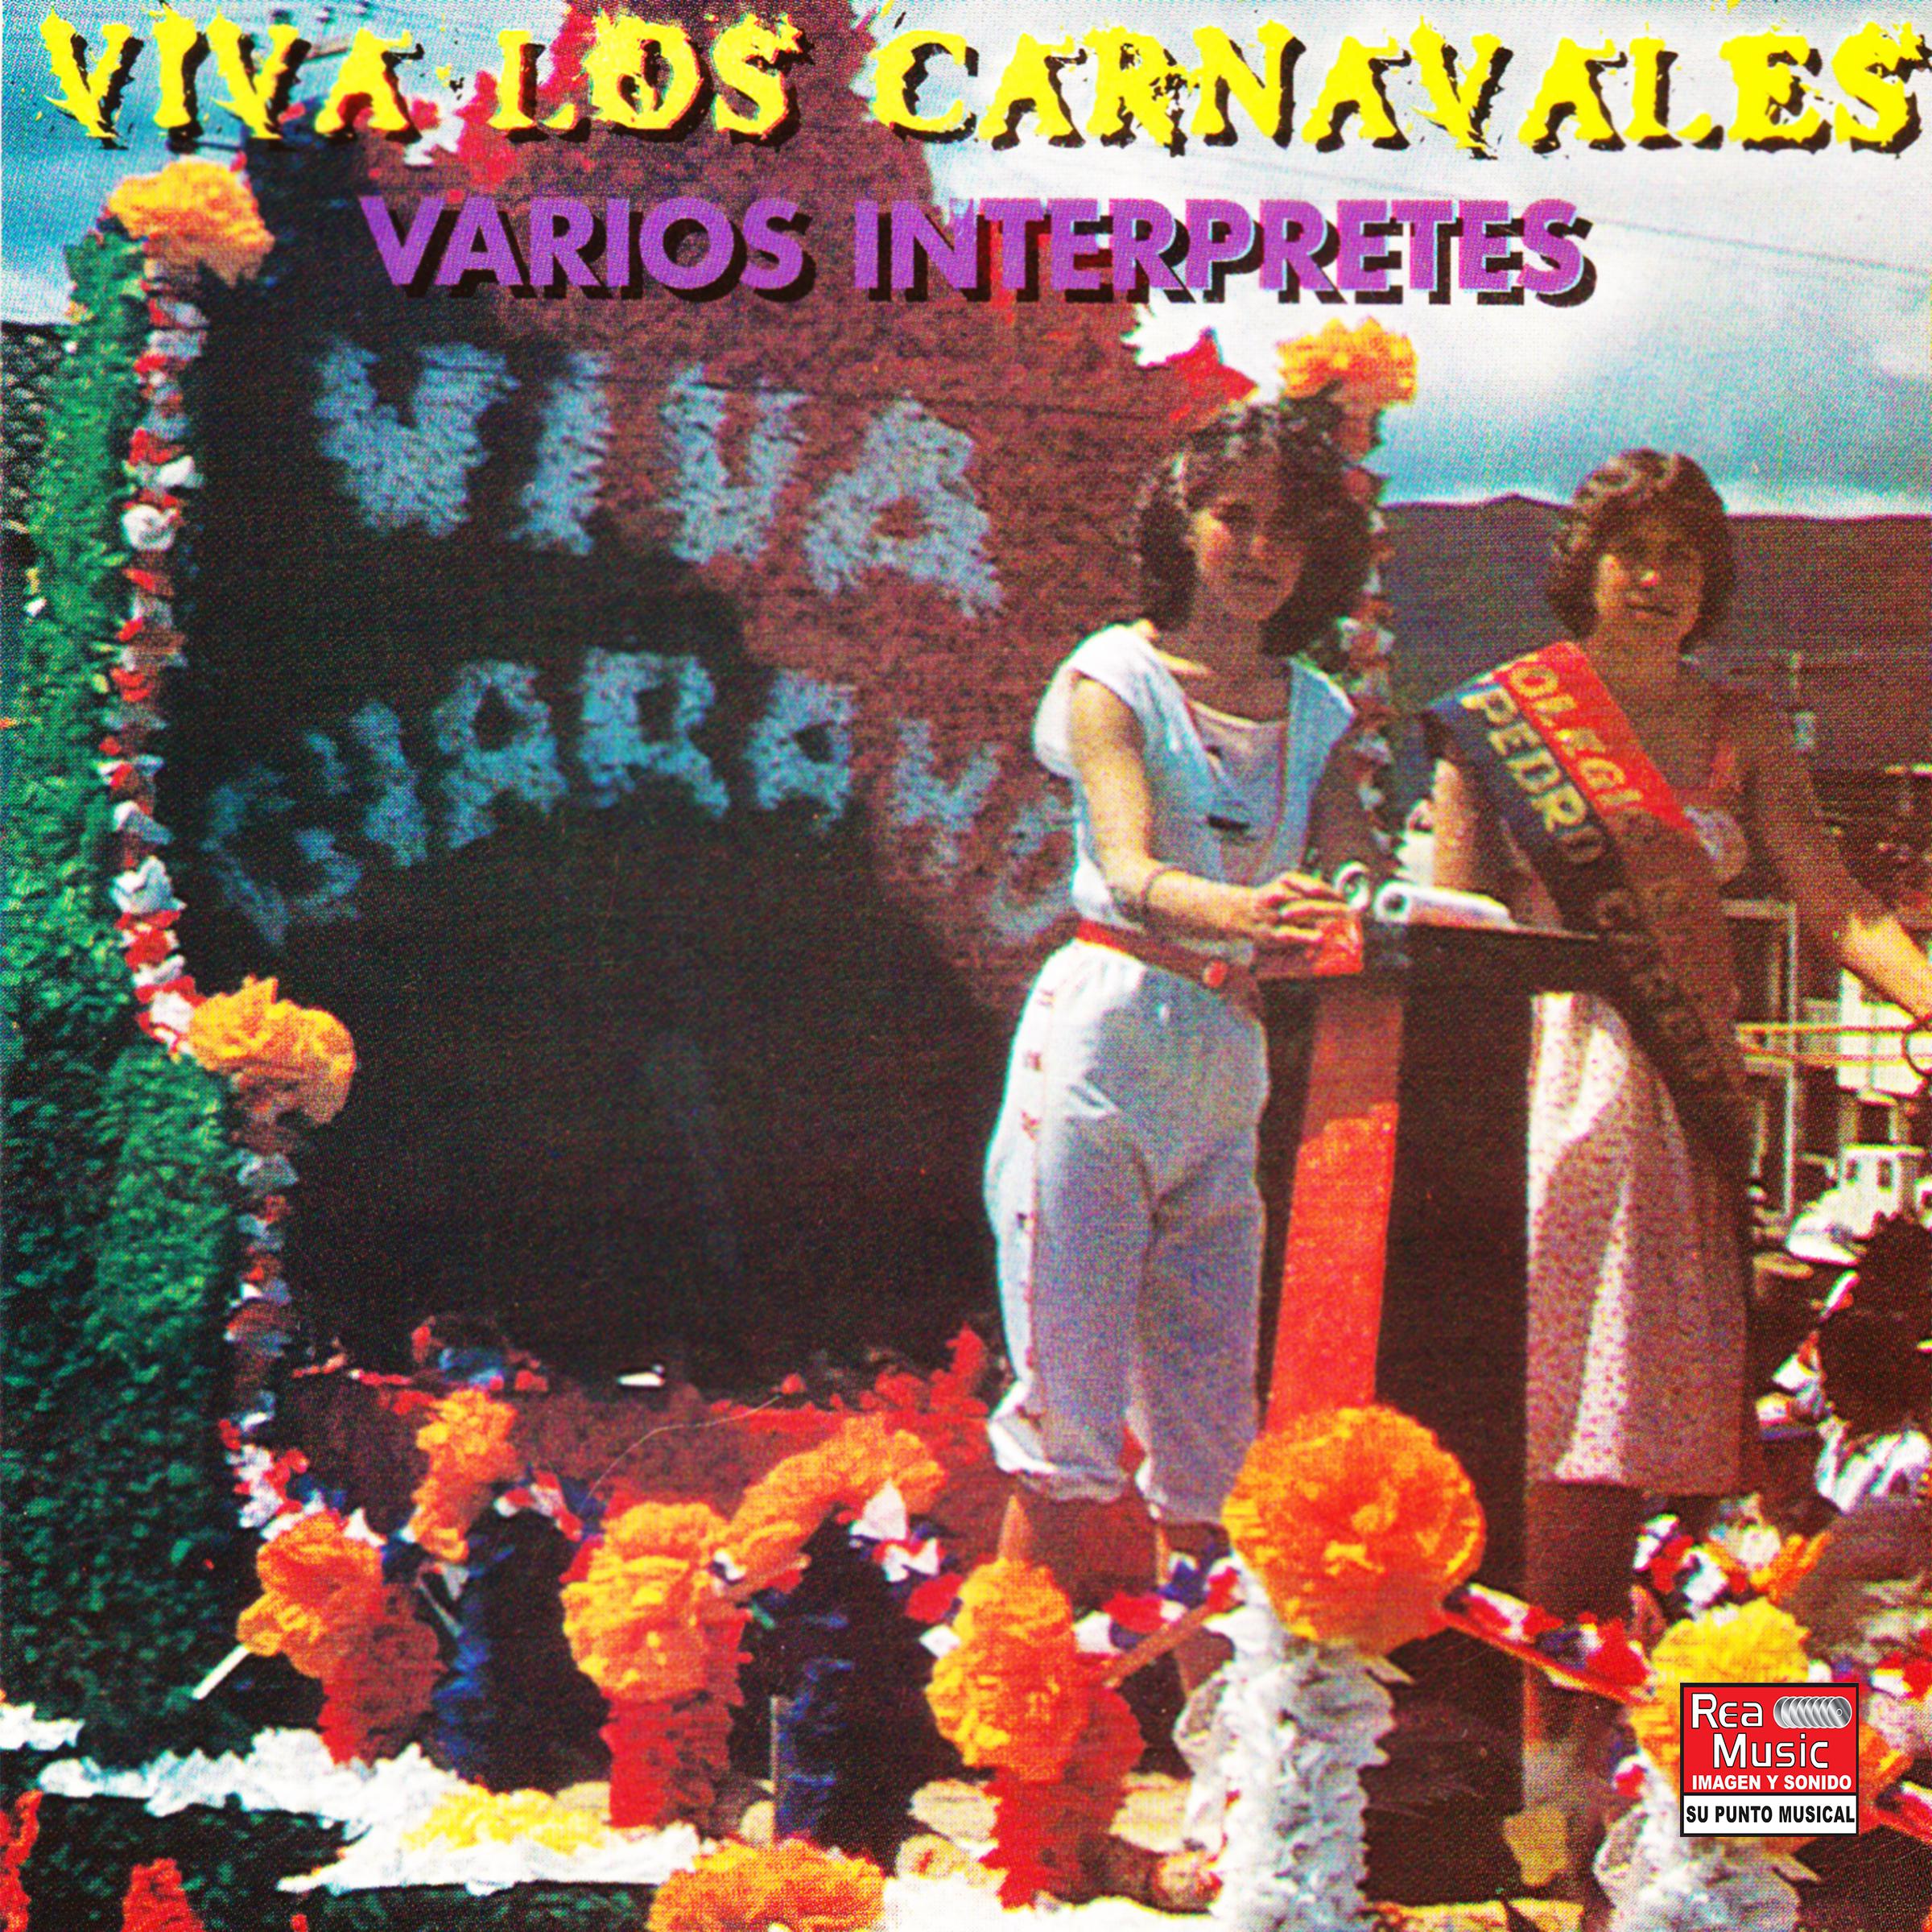 Guaranda Canta en Carnaval